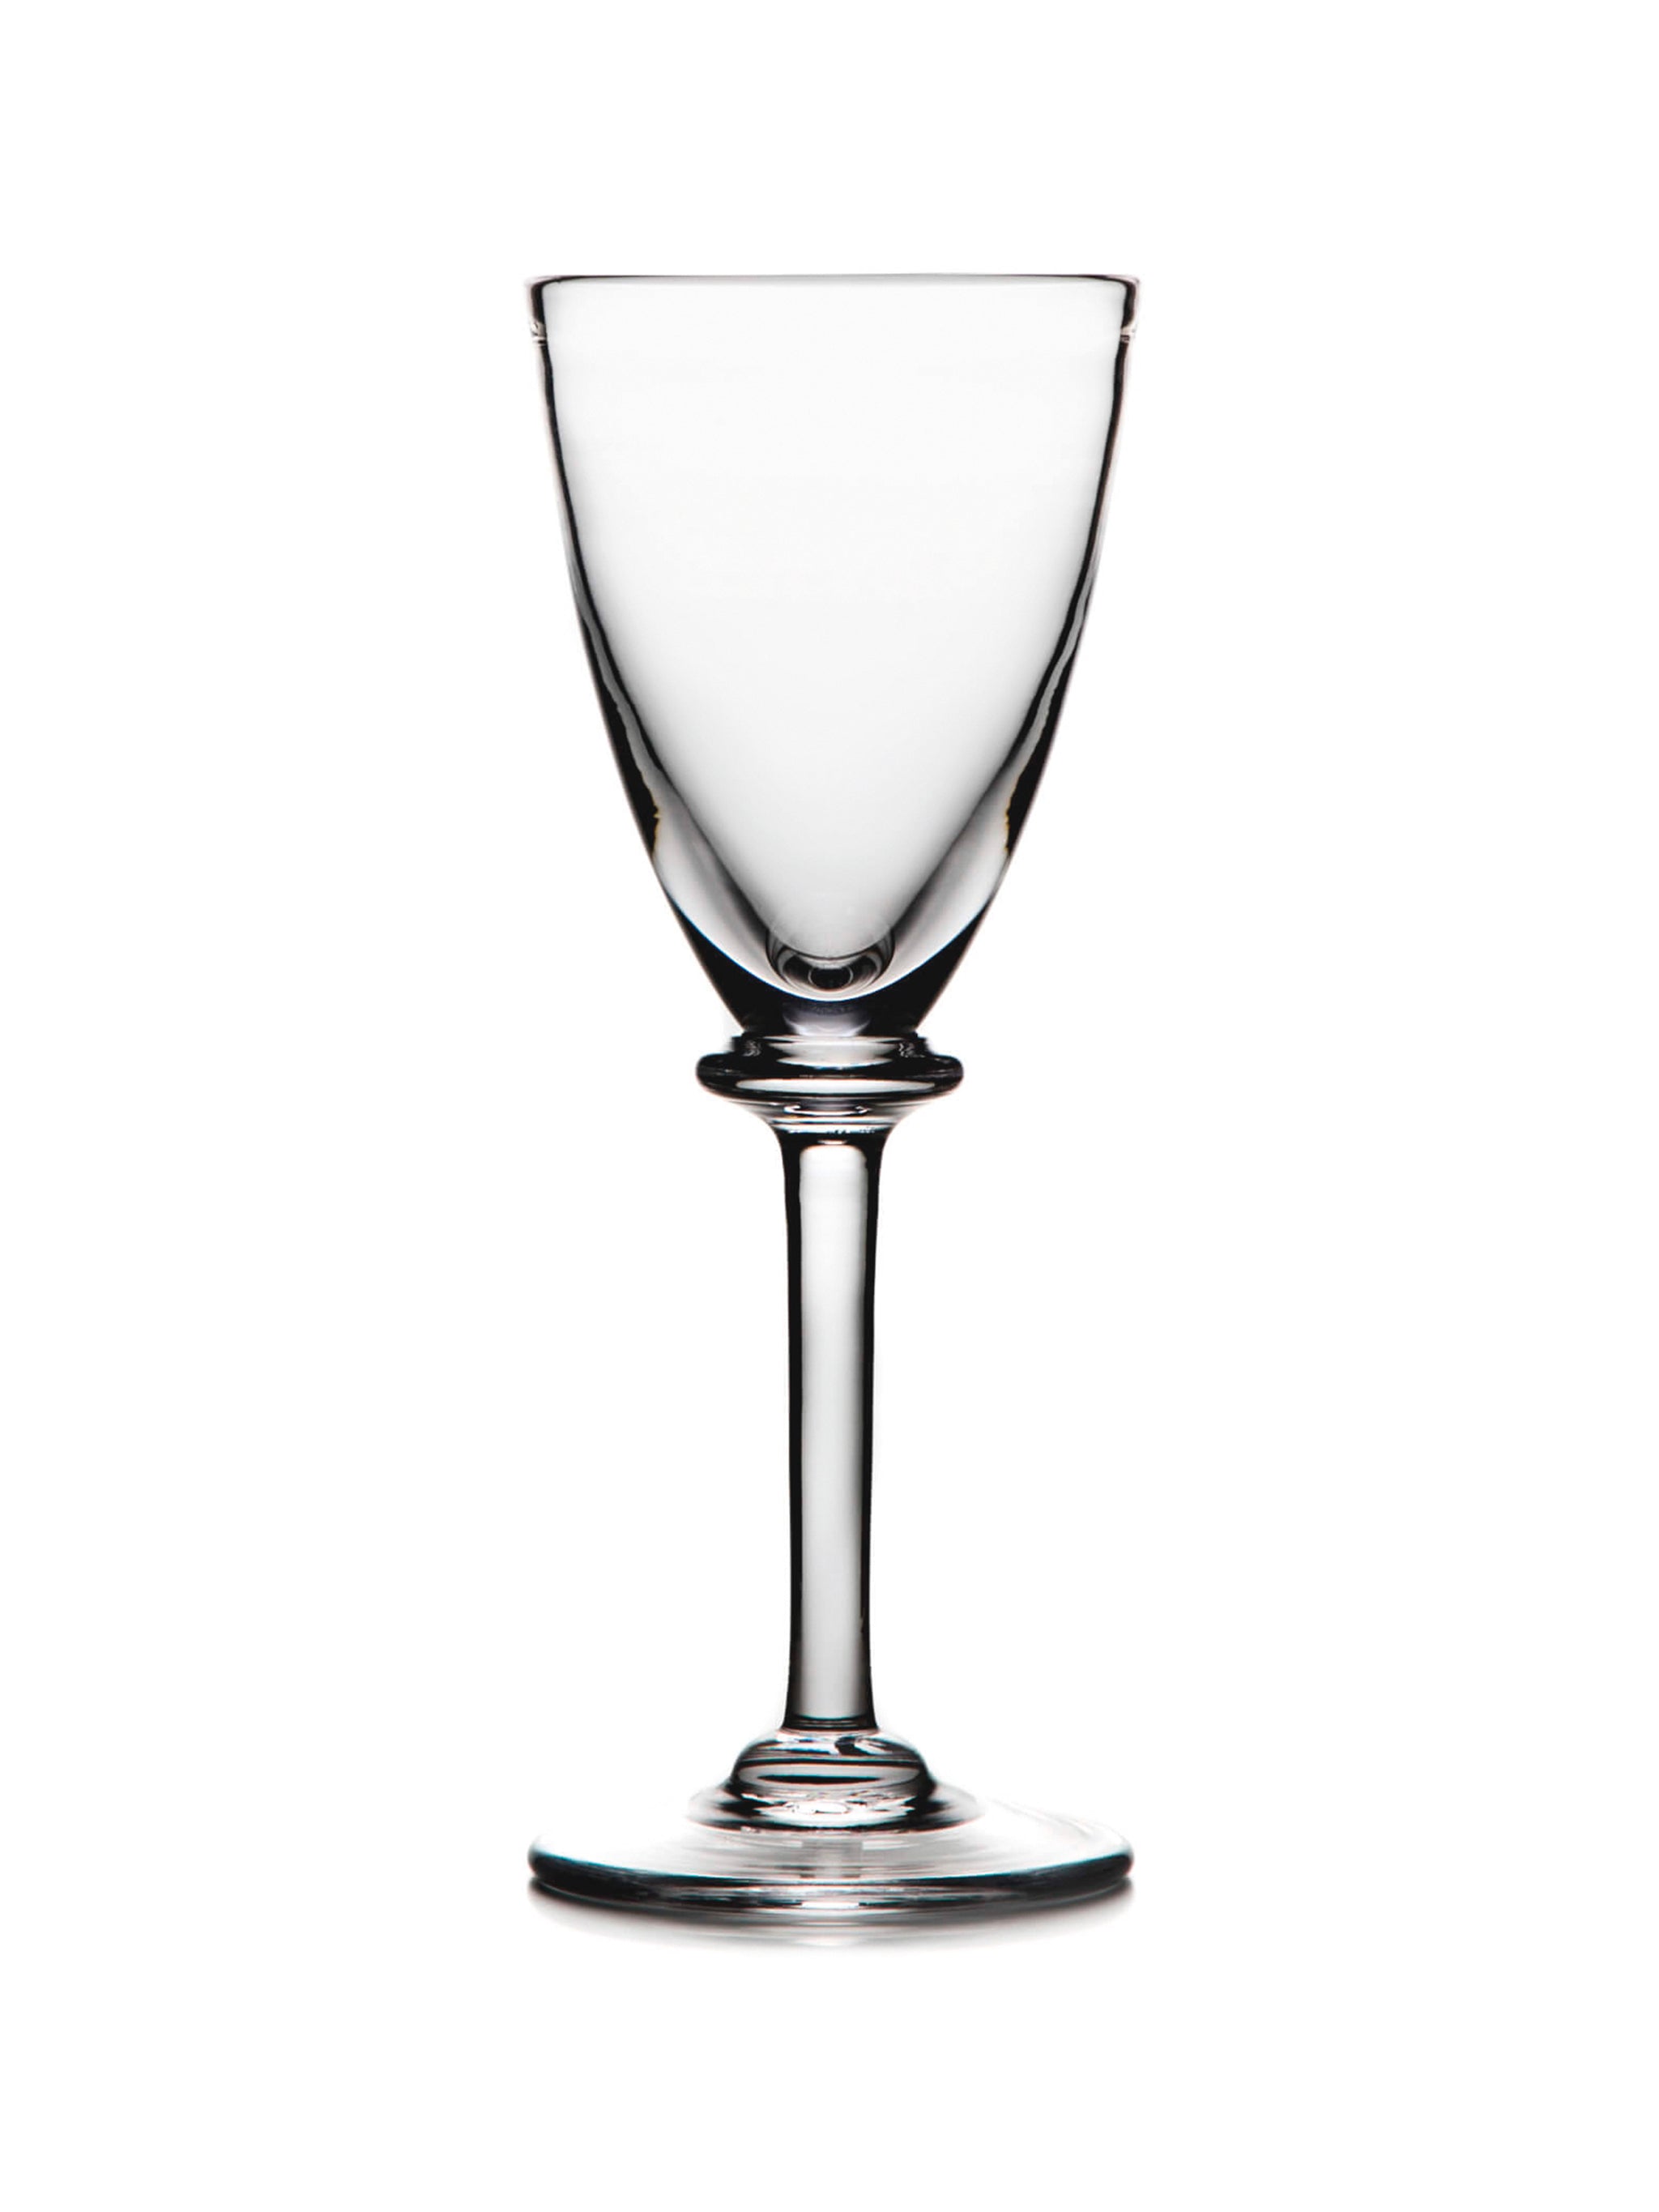 Simon Pearce Westport Stemless Martini Glass - 6 oz